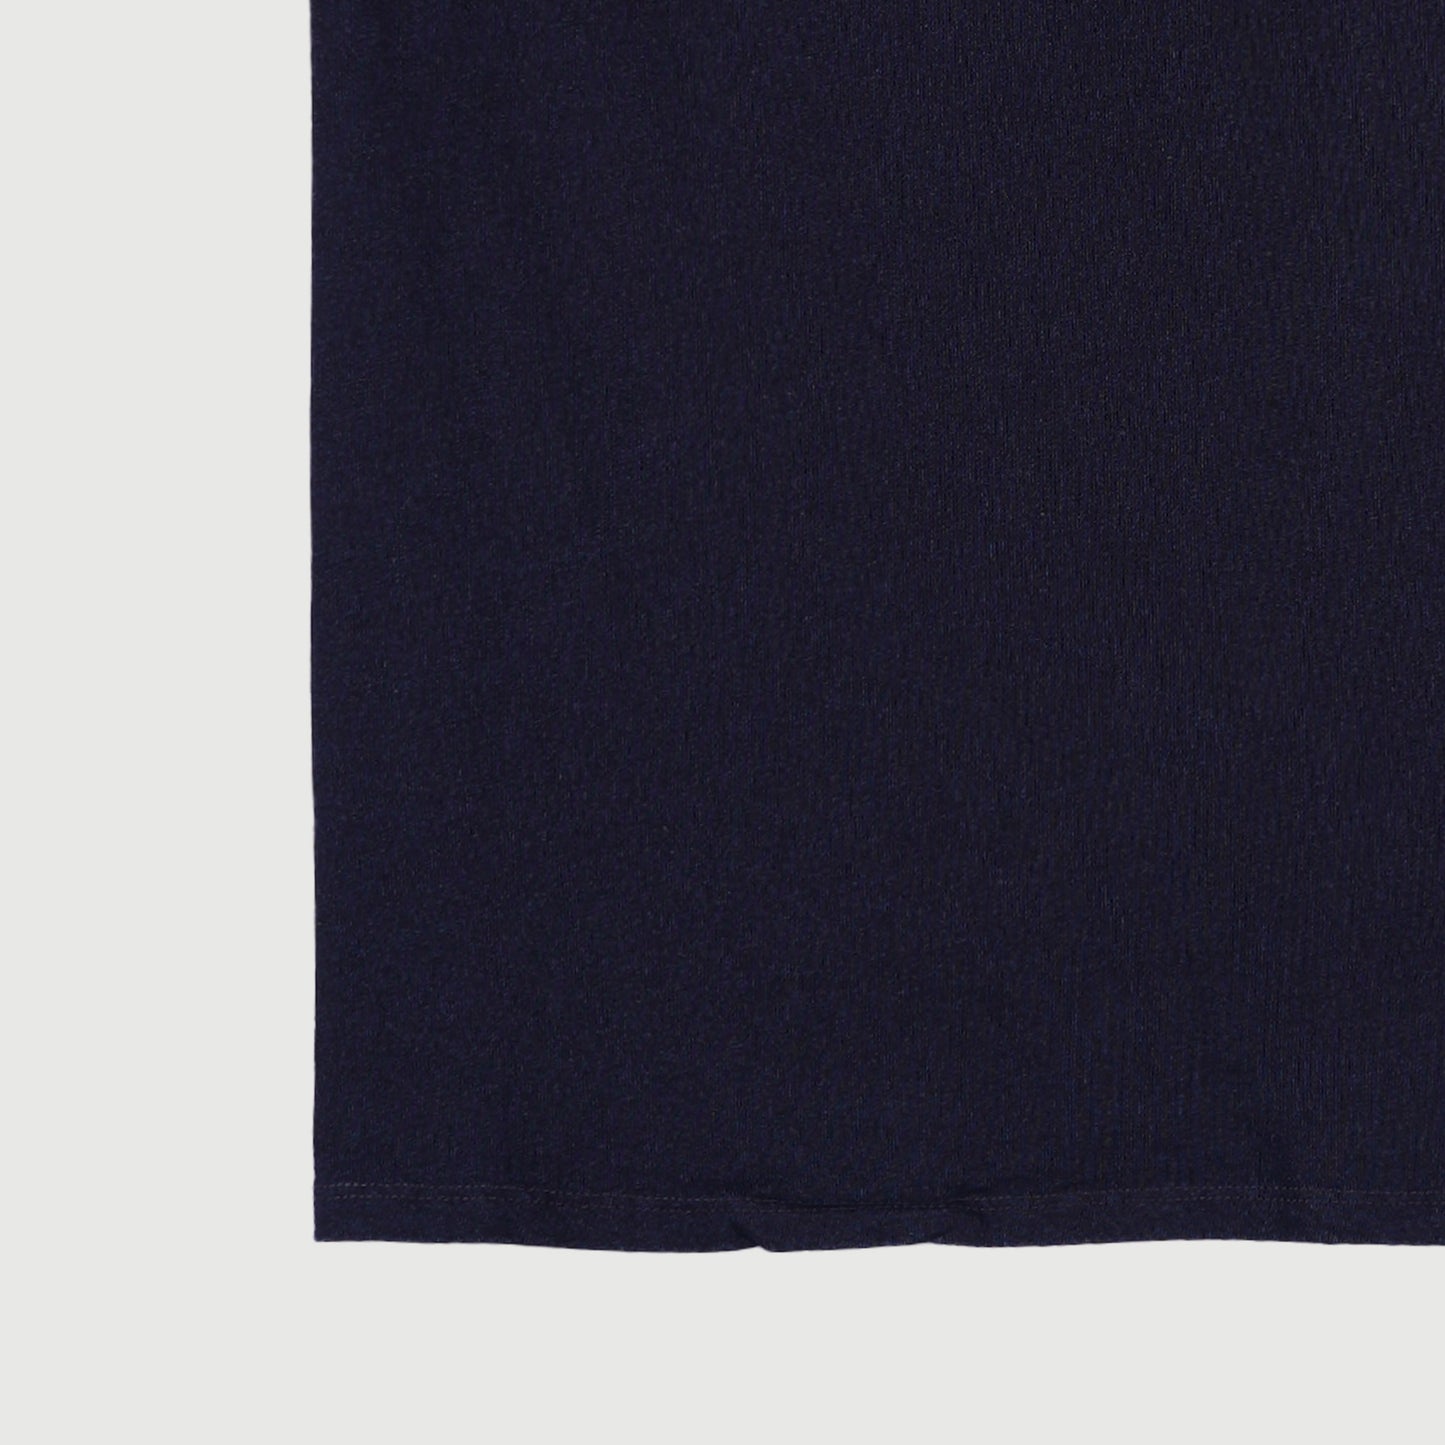 Petrol Basic Tees for Ladies Regular Fitting Shirt Trendy fashion Casual Top Dark Wash T-shirt for Ladies 113763 (Dark Wash)